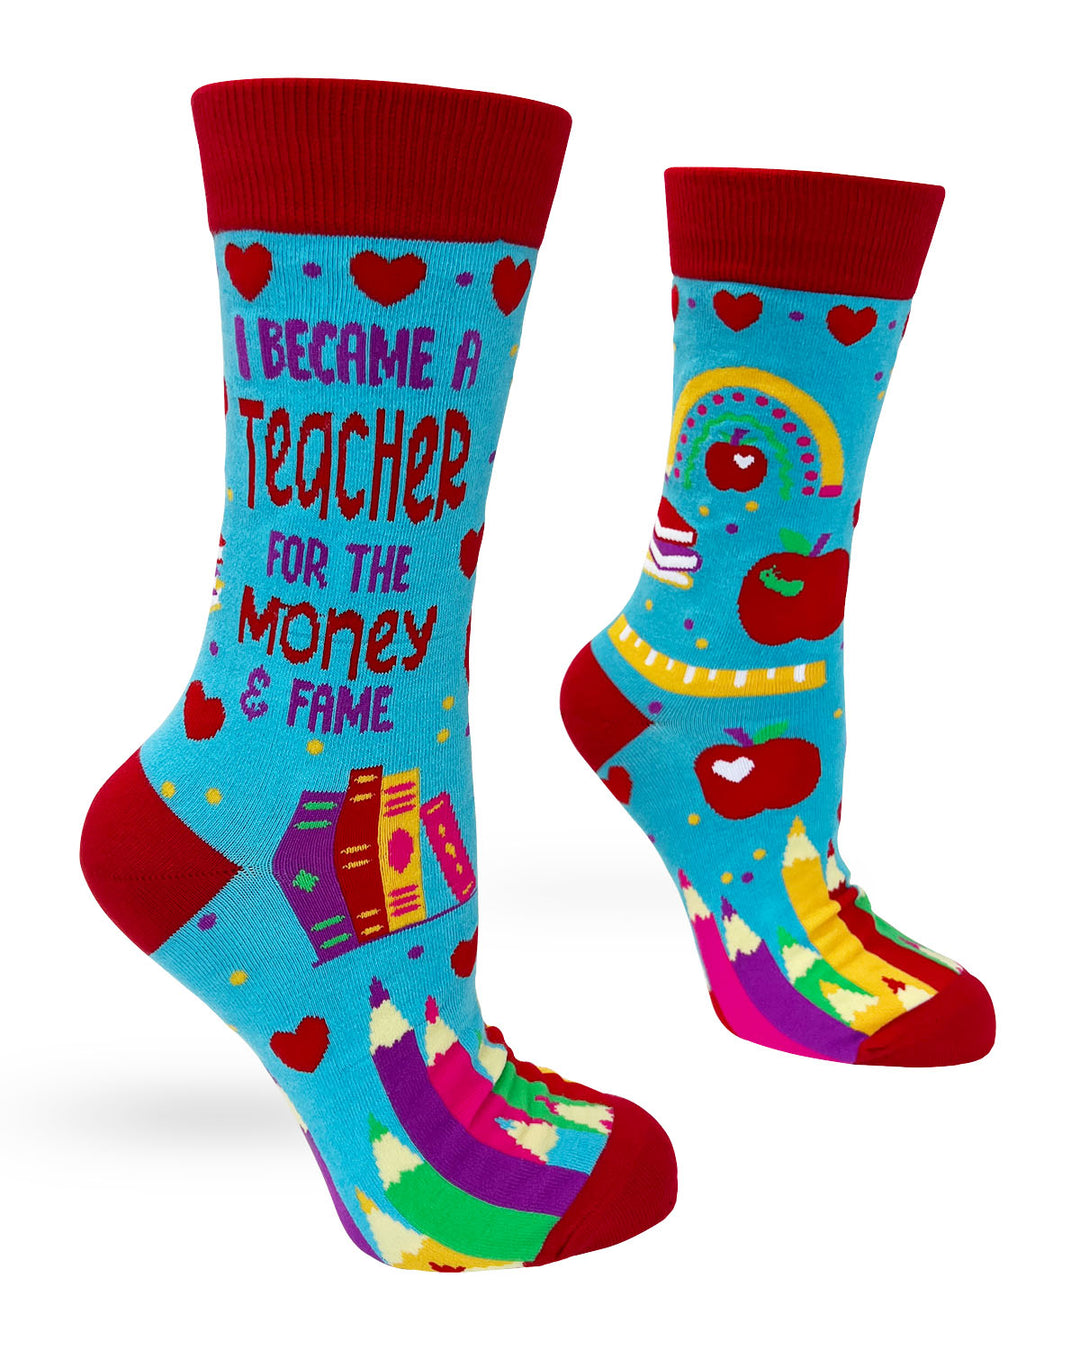 I Became a Teacher For The Money and Fame Women's Novelty Crew Socks